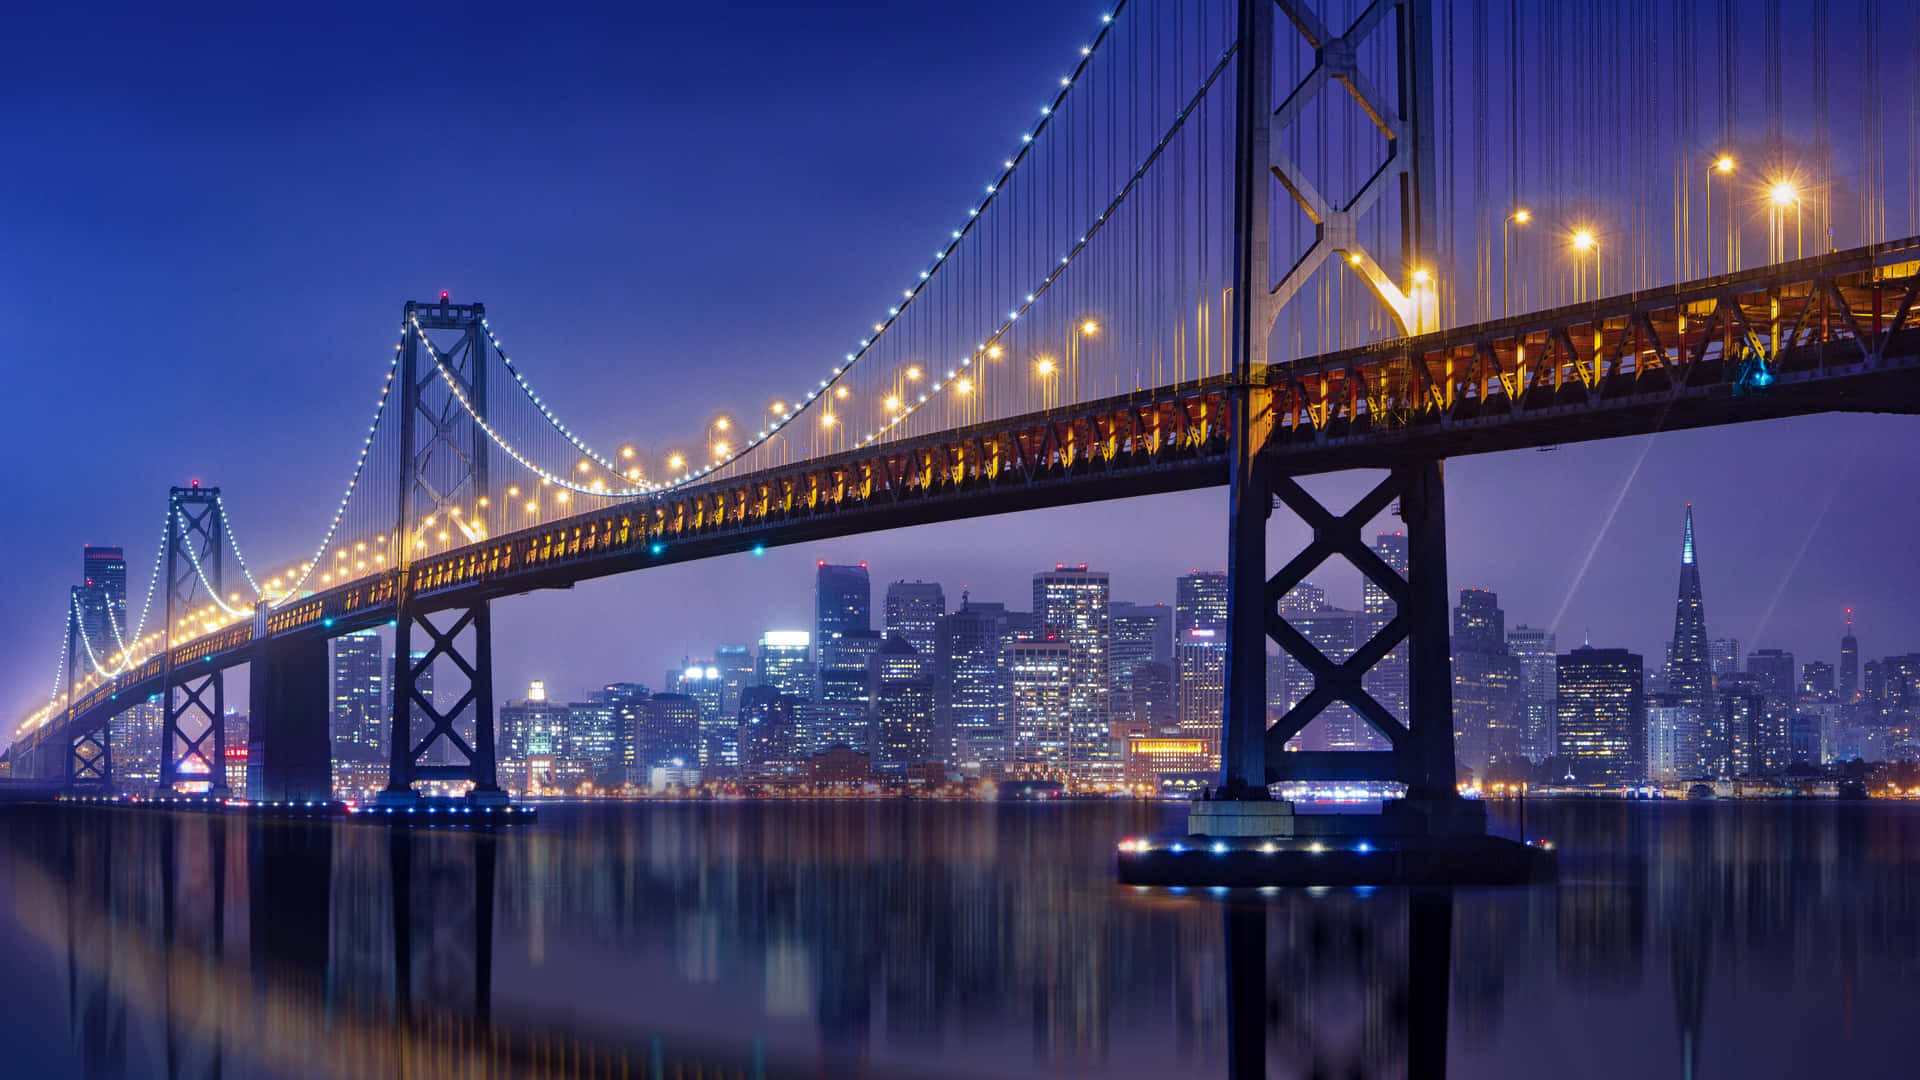 San Francisco Bay Bridge Night Lights4 K Wallpaper